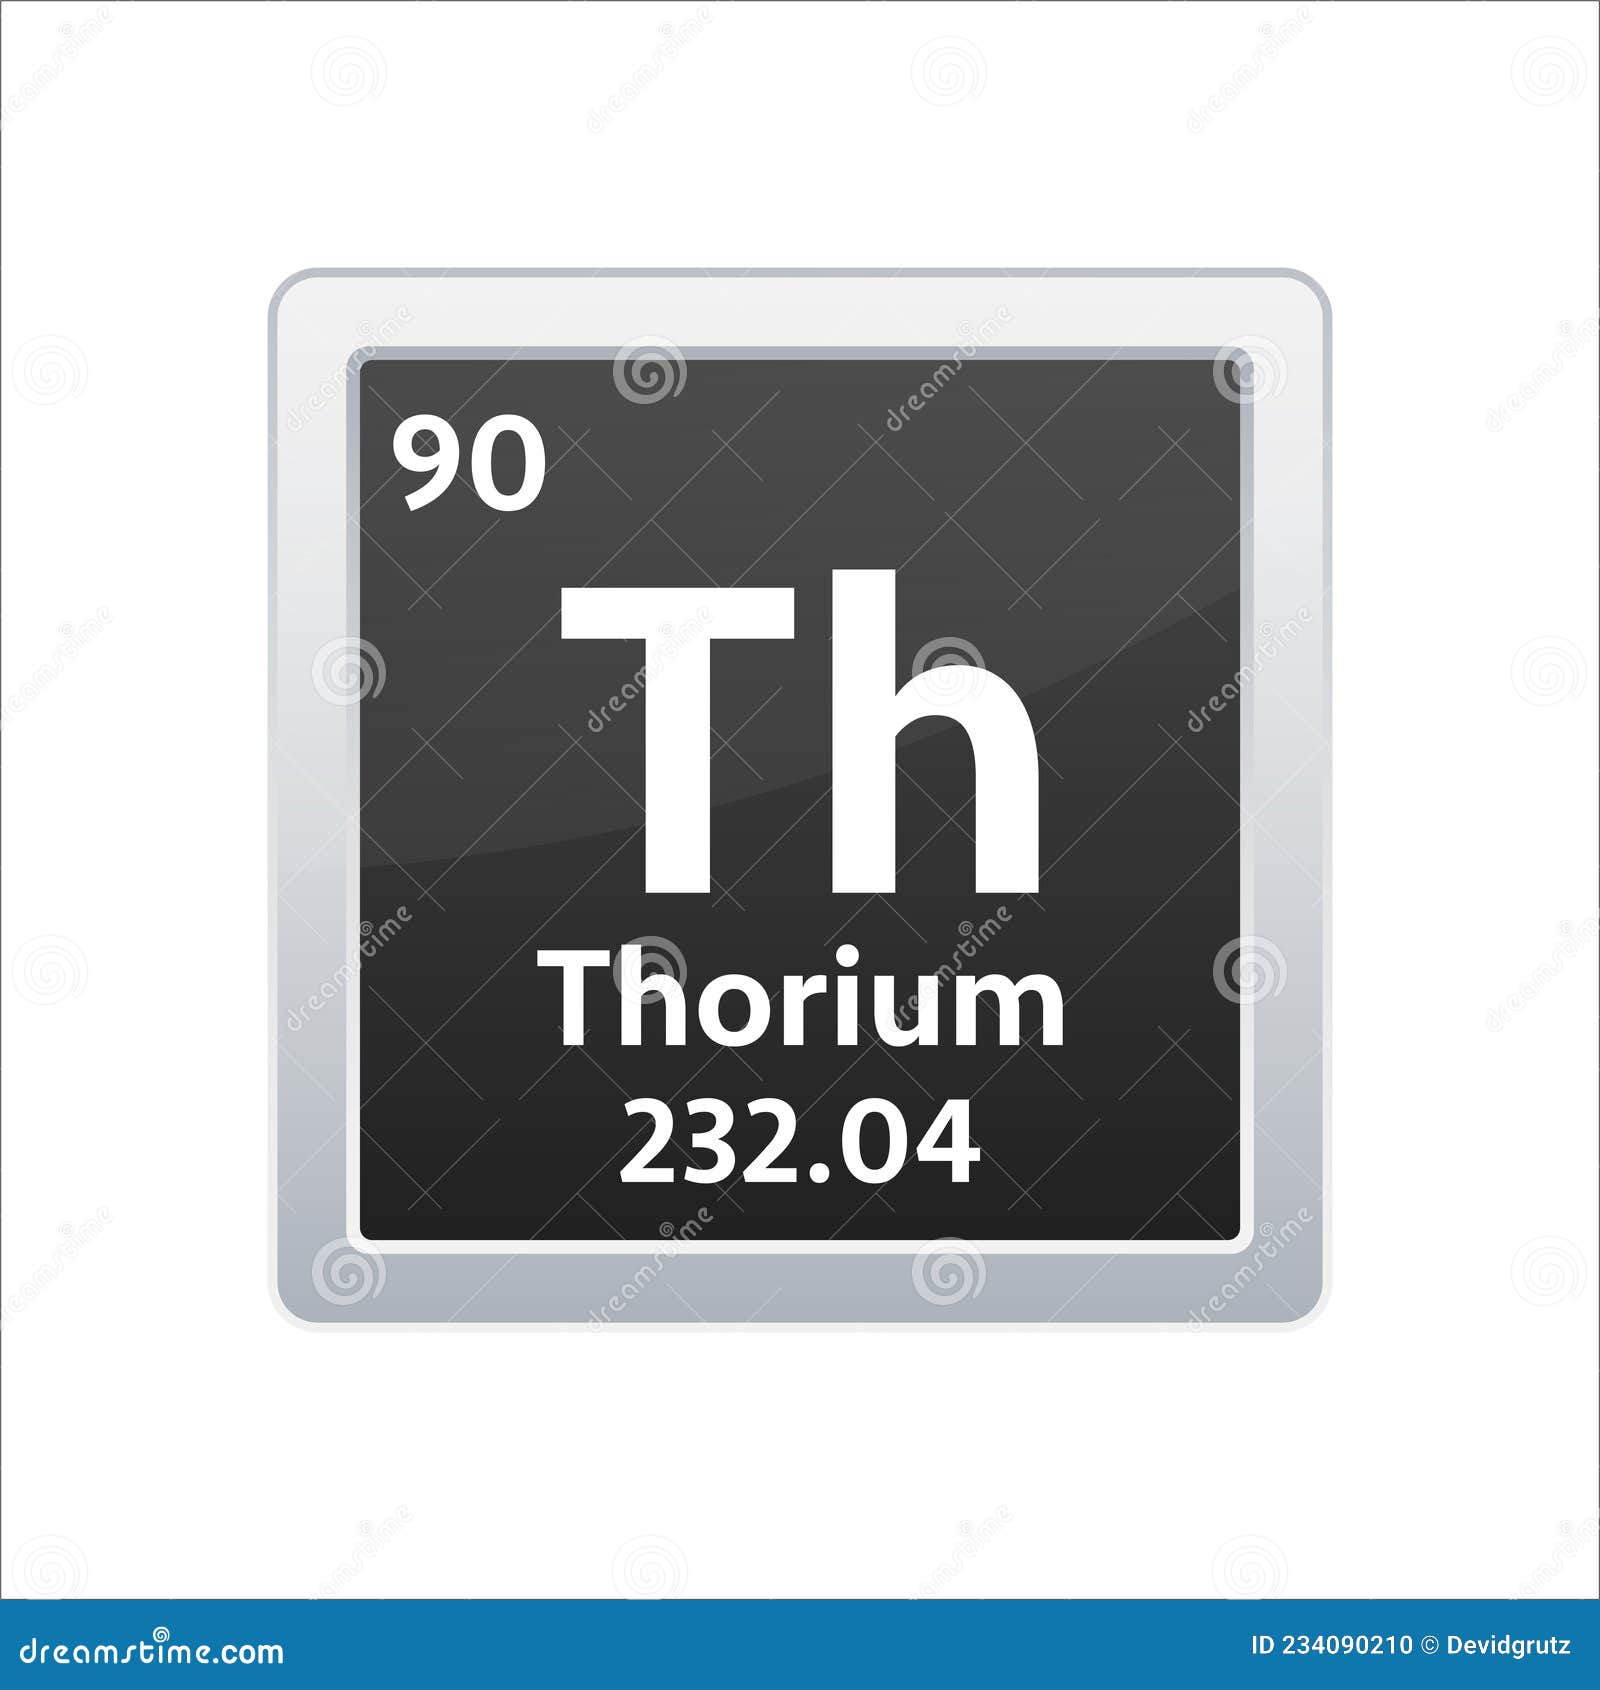 Thorium Symbol. Chemical Element of the Periodic Table Stock Vector ...